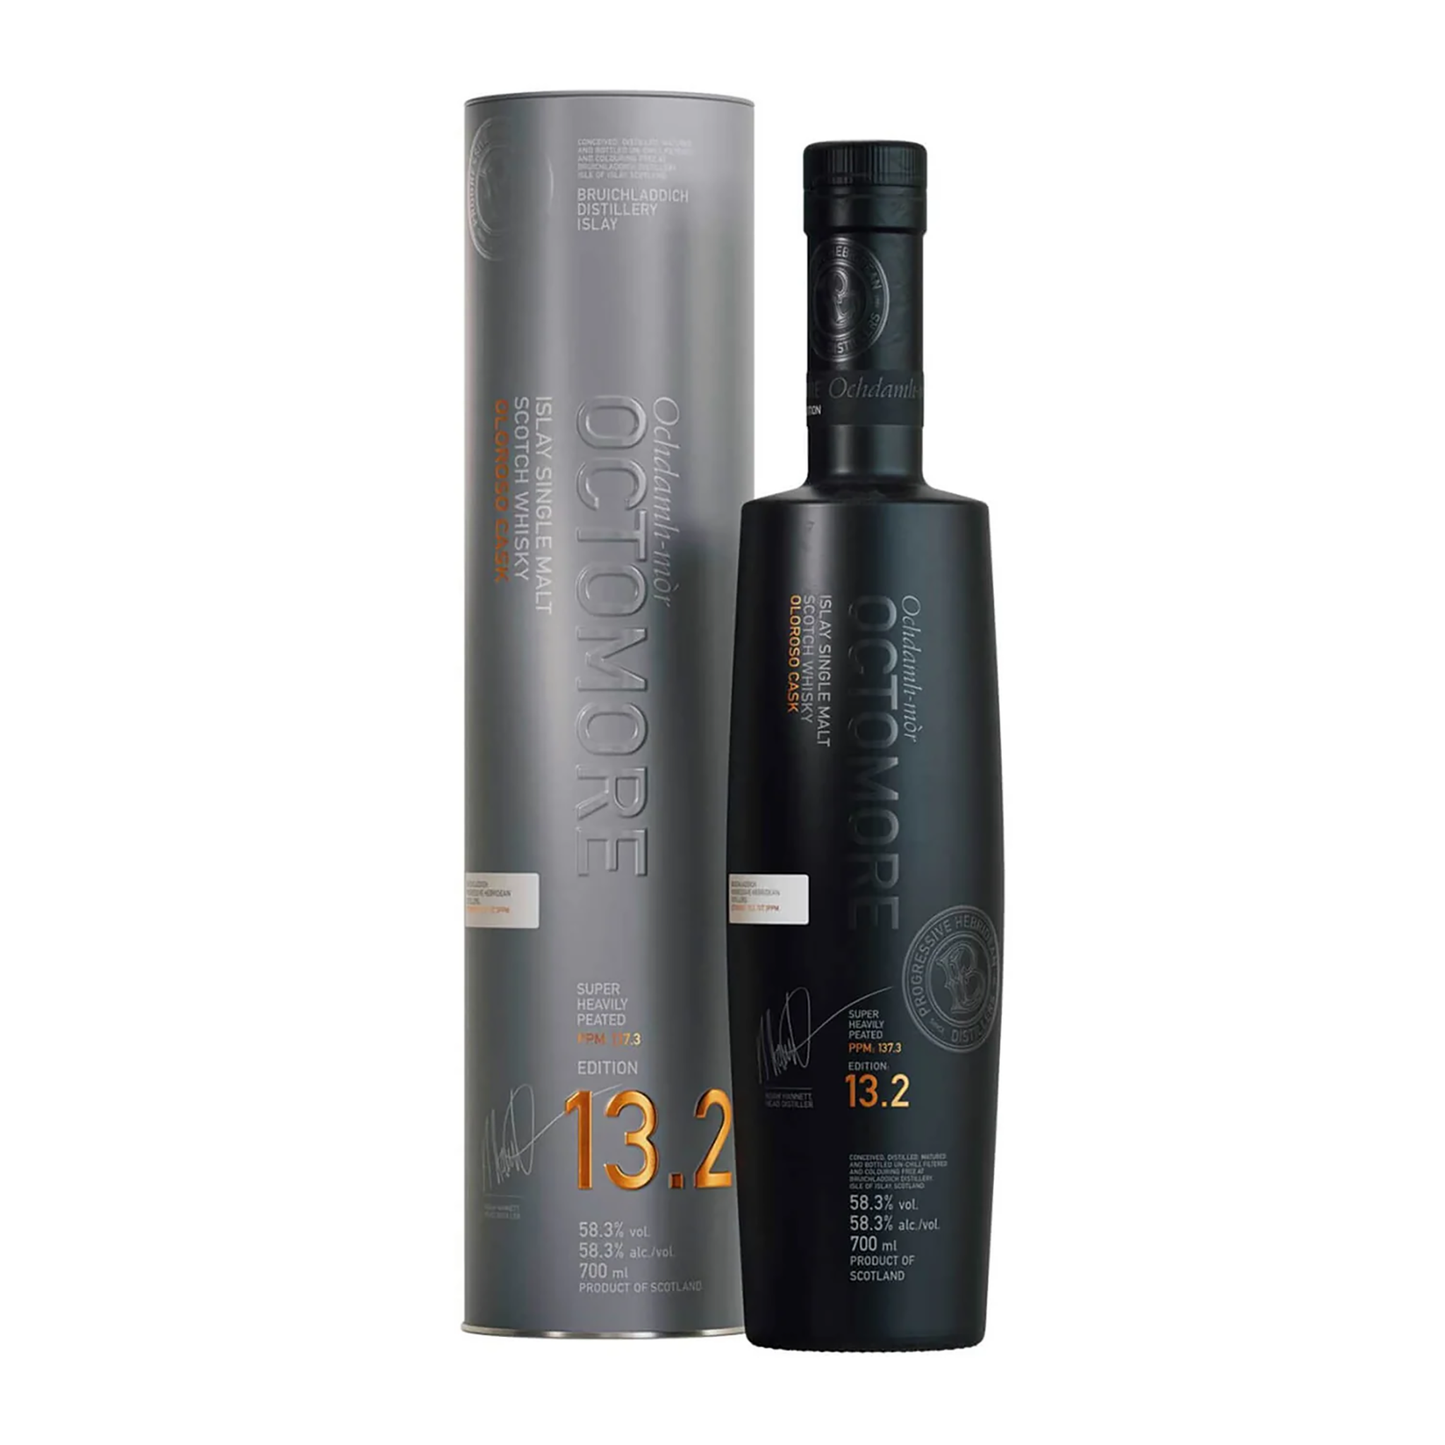 Bruichladdich Octomore 13.2 Cask Strength Single Malt Scotch Whisky 700ml